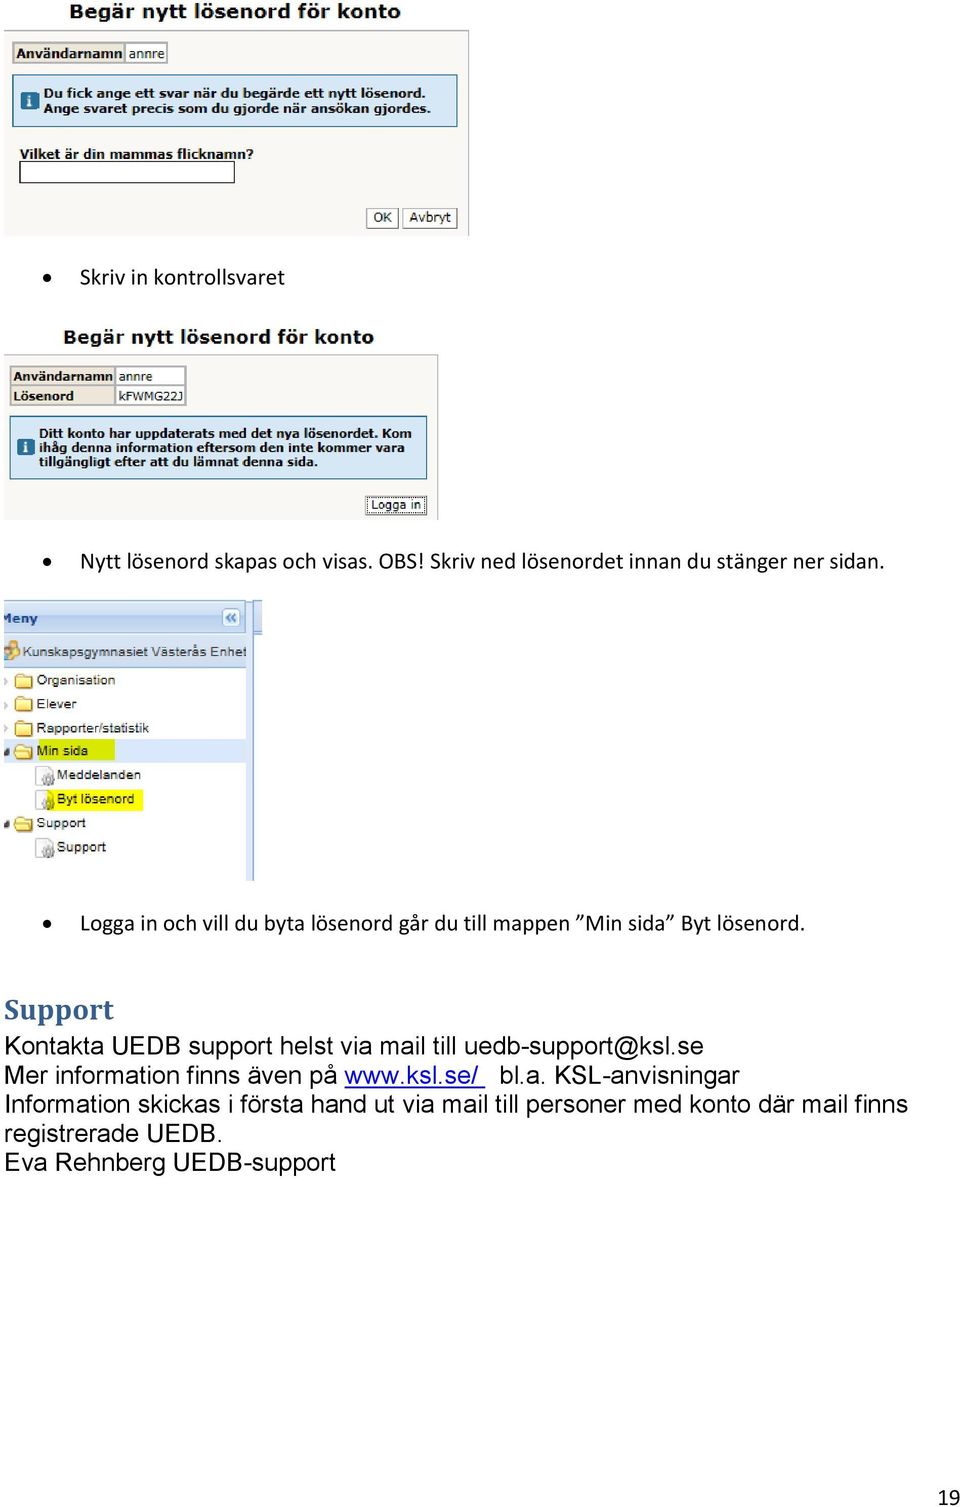 Support Kontakta UEDB support helst via mail till uedb-support@ksl.se Mer information finns även på www.ksl.se/ bl.